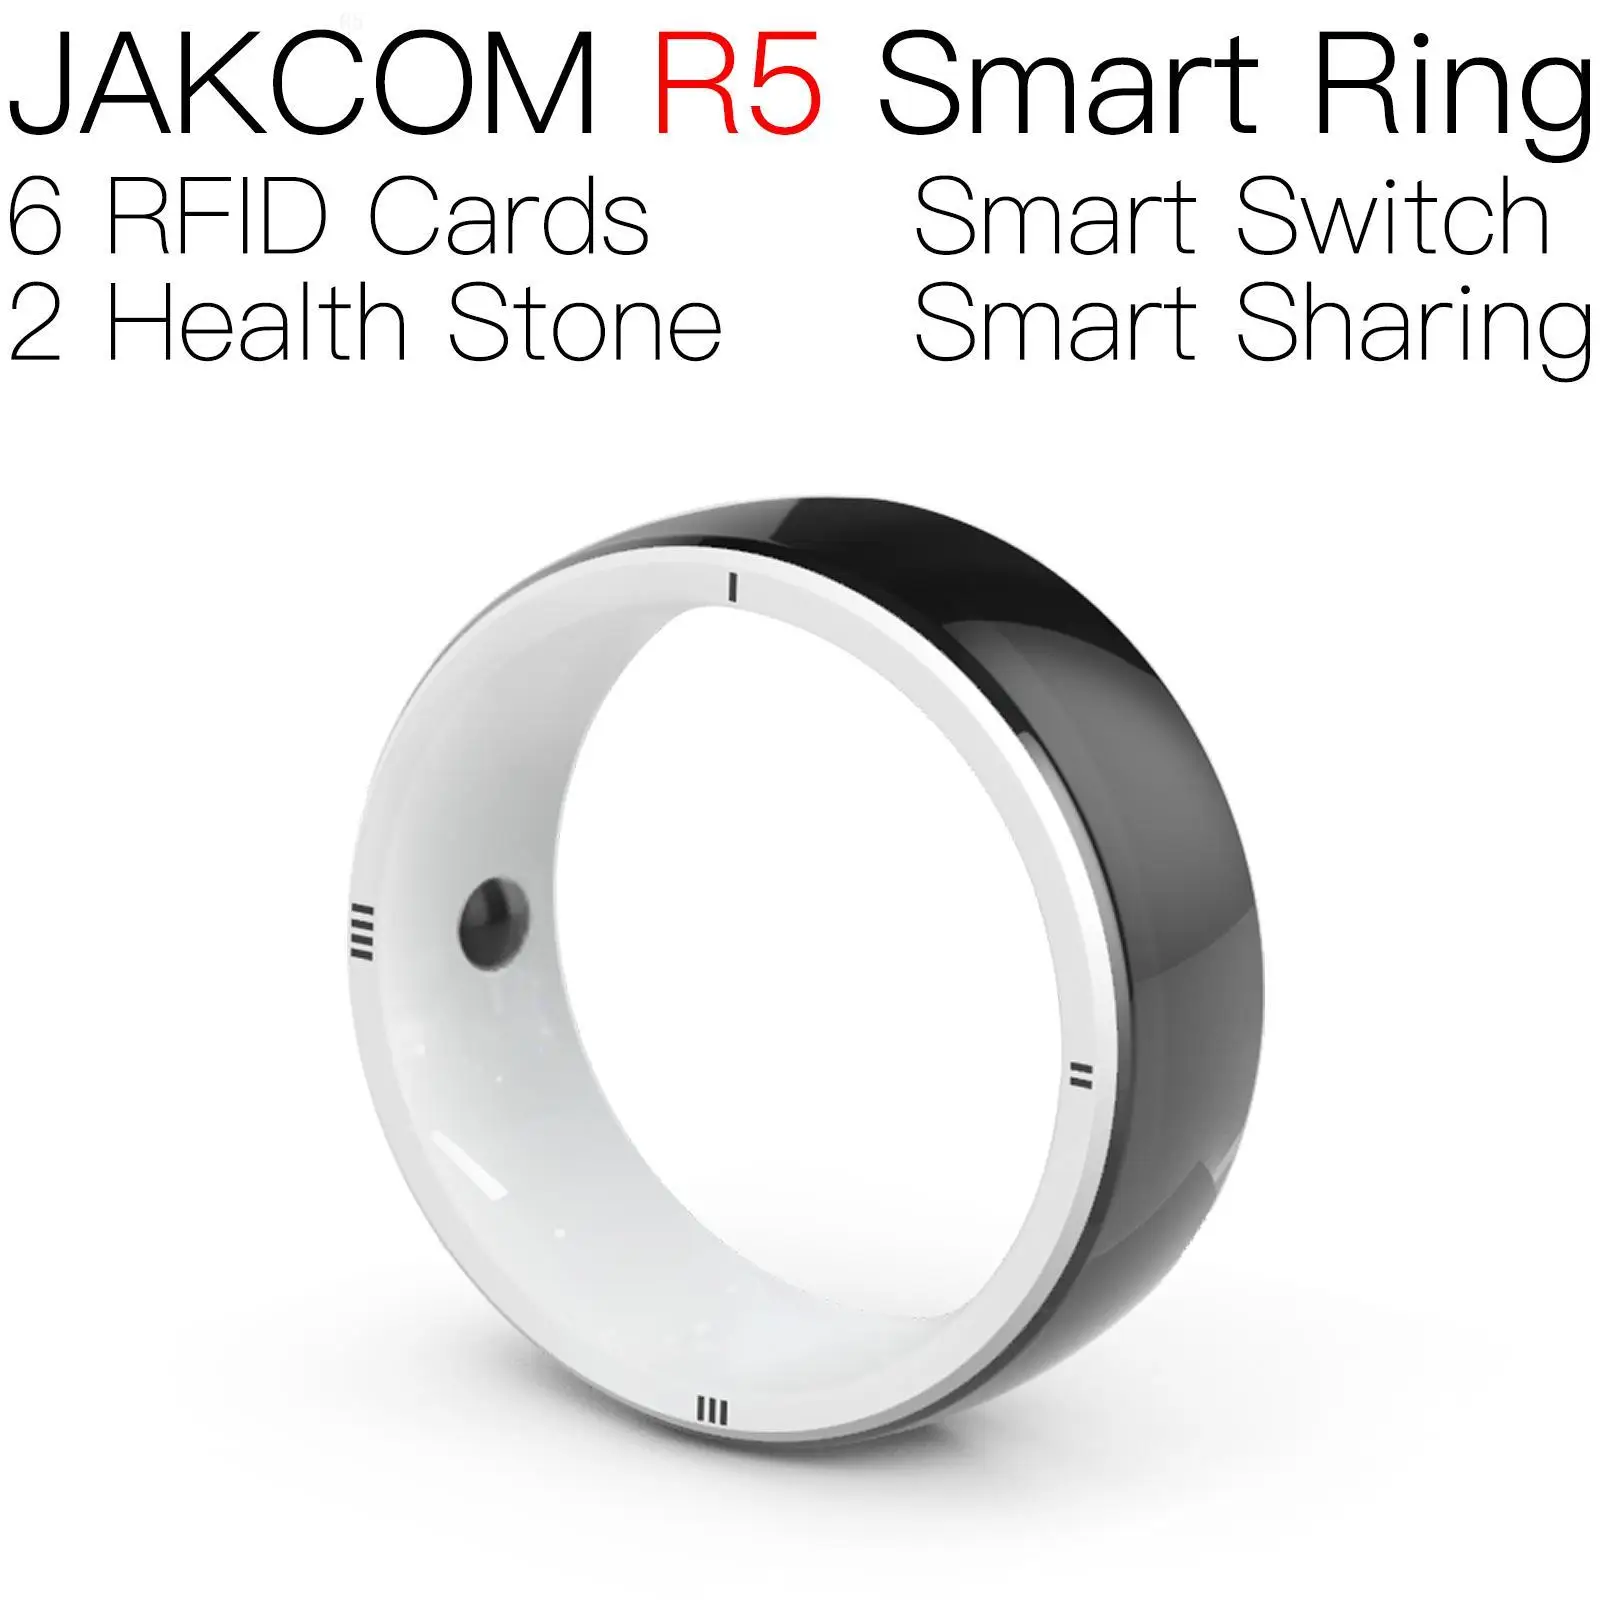 JAKCOM R5 Smart Ring Newer than usb htv 7 brasil original electric smart drill watch serie officiale store ip68